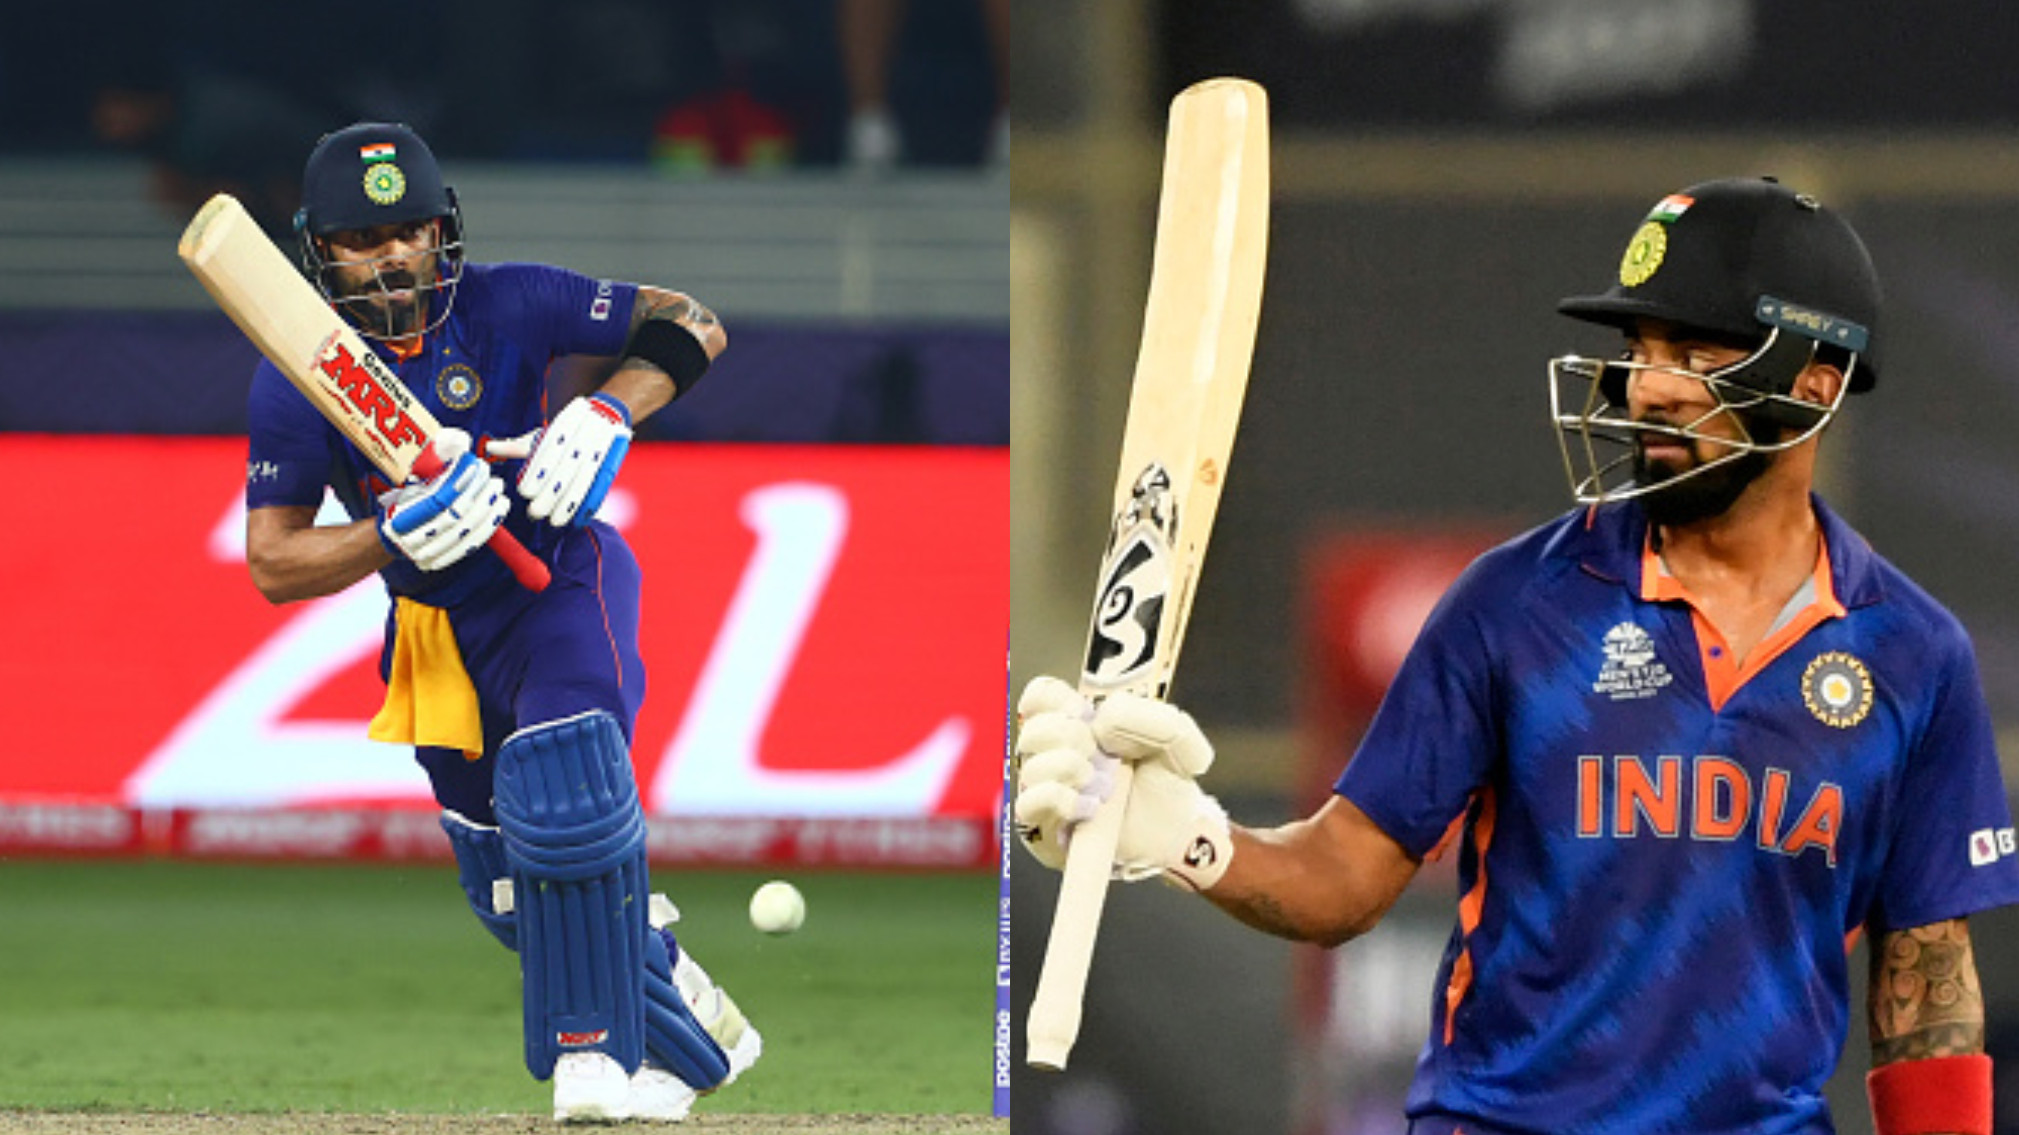 KL Rahul moves to 5th spot, Virat Kohli drops to 8th in the latest ICC T20I batting rankings